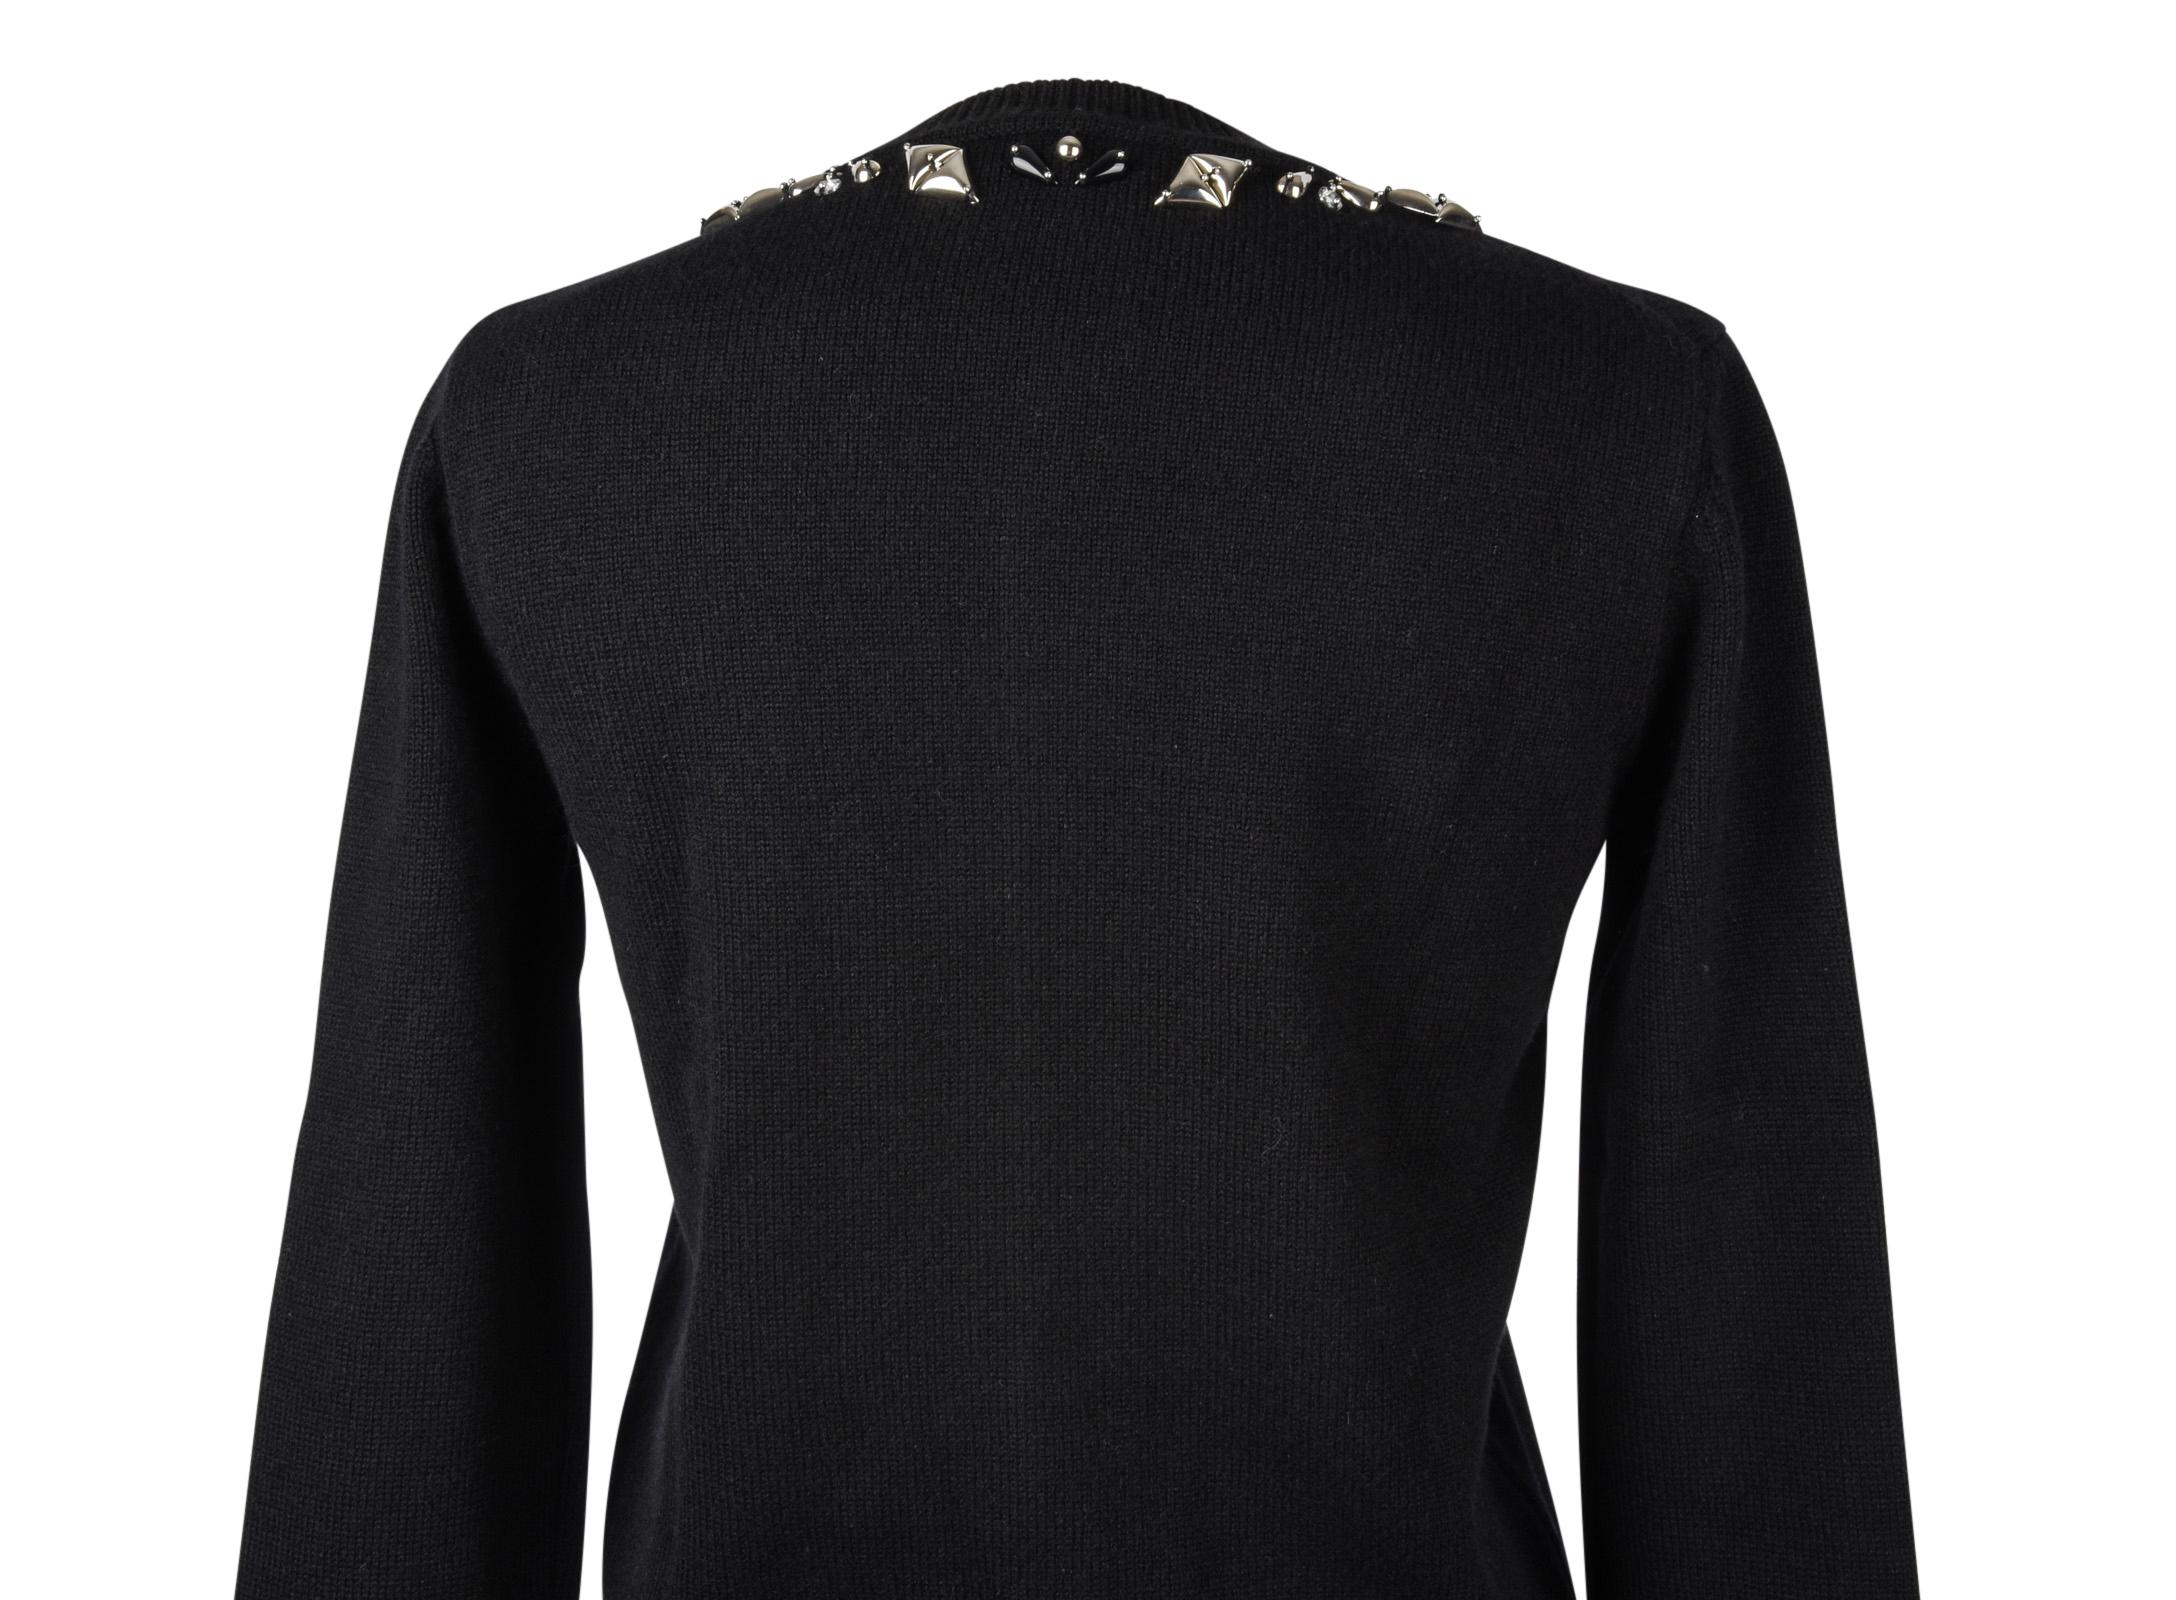 Women's Louis Vuitton Cardigan Black Cashmere Silver Embellished Front S